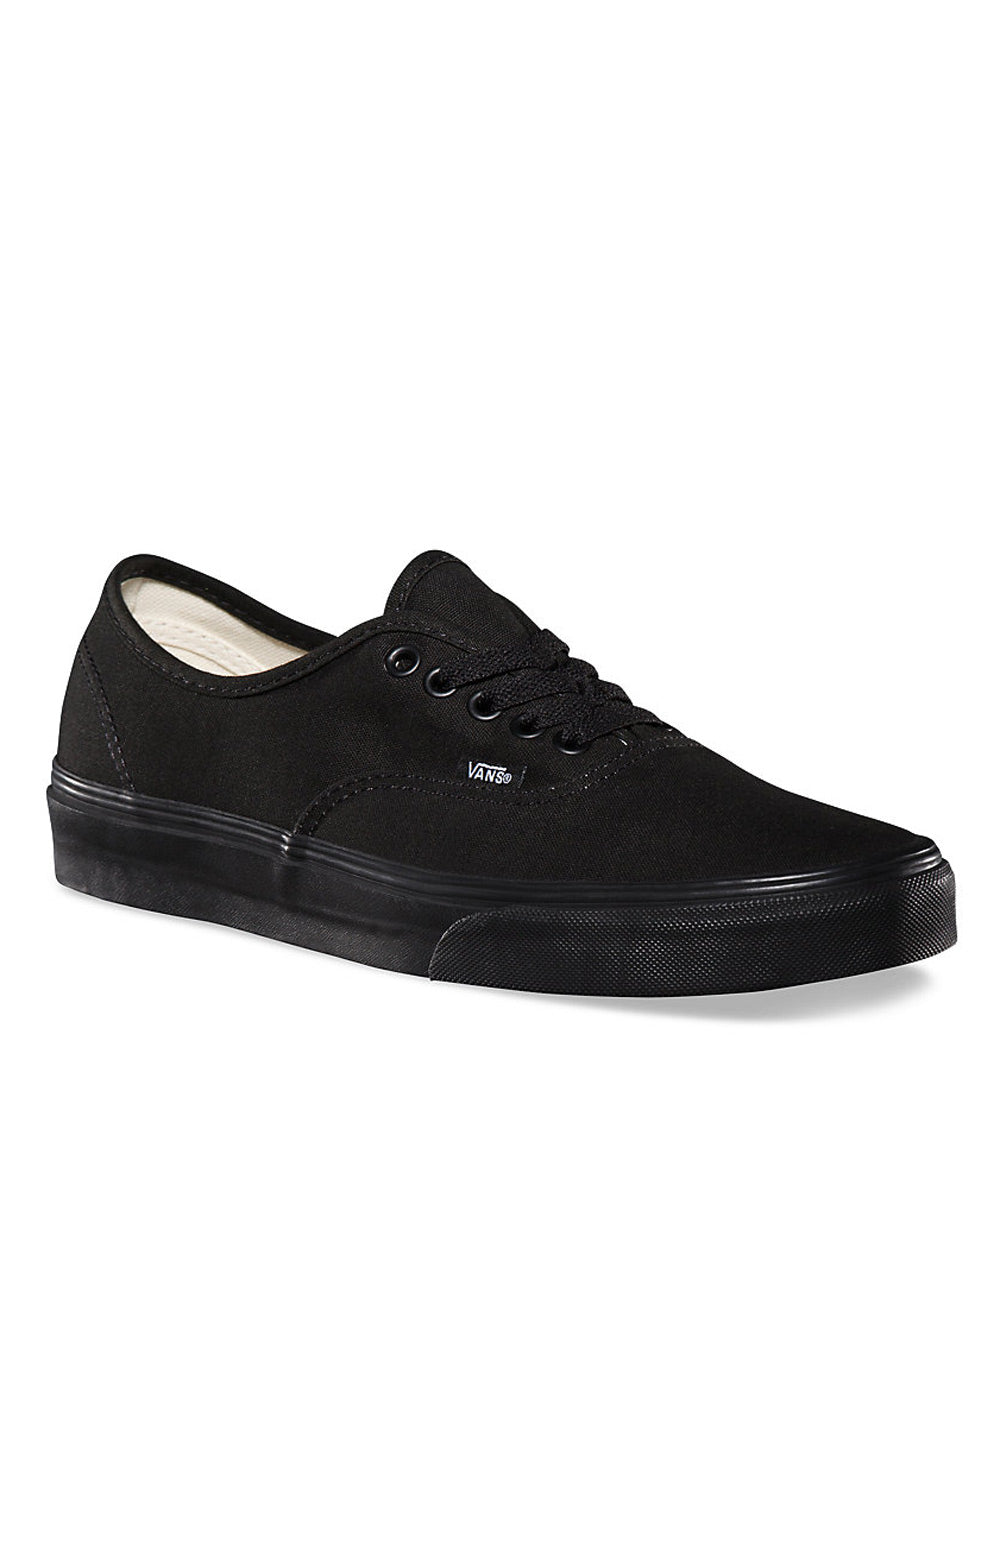 (EE3BKA) Authentic Shoe - Black/Black